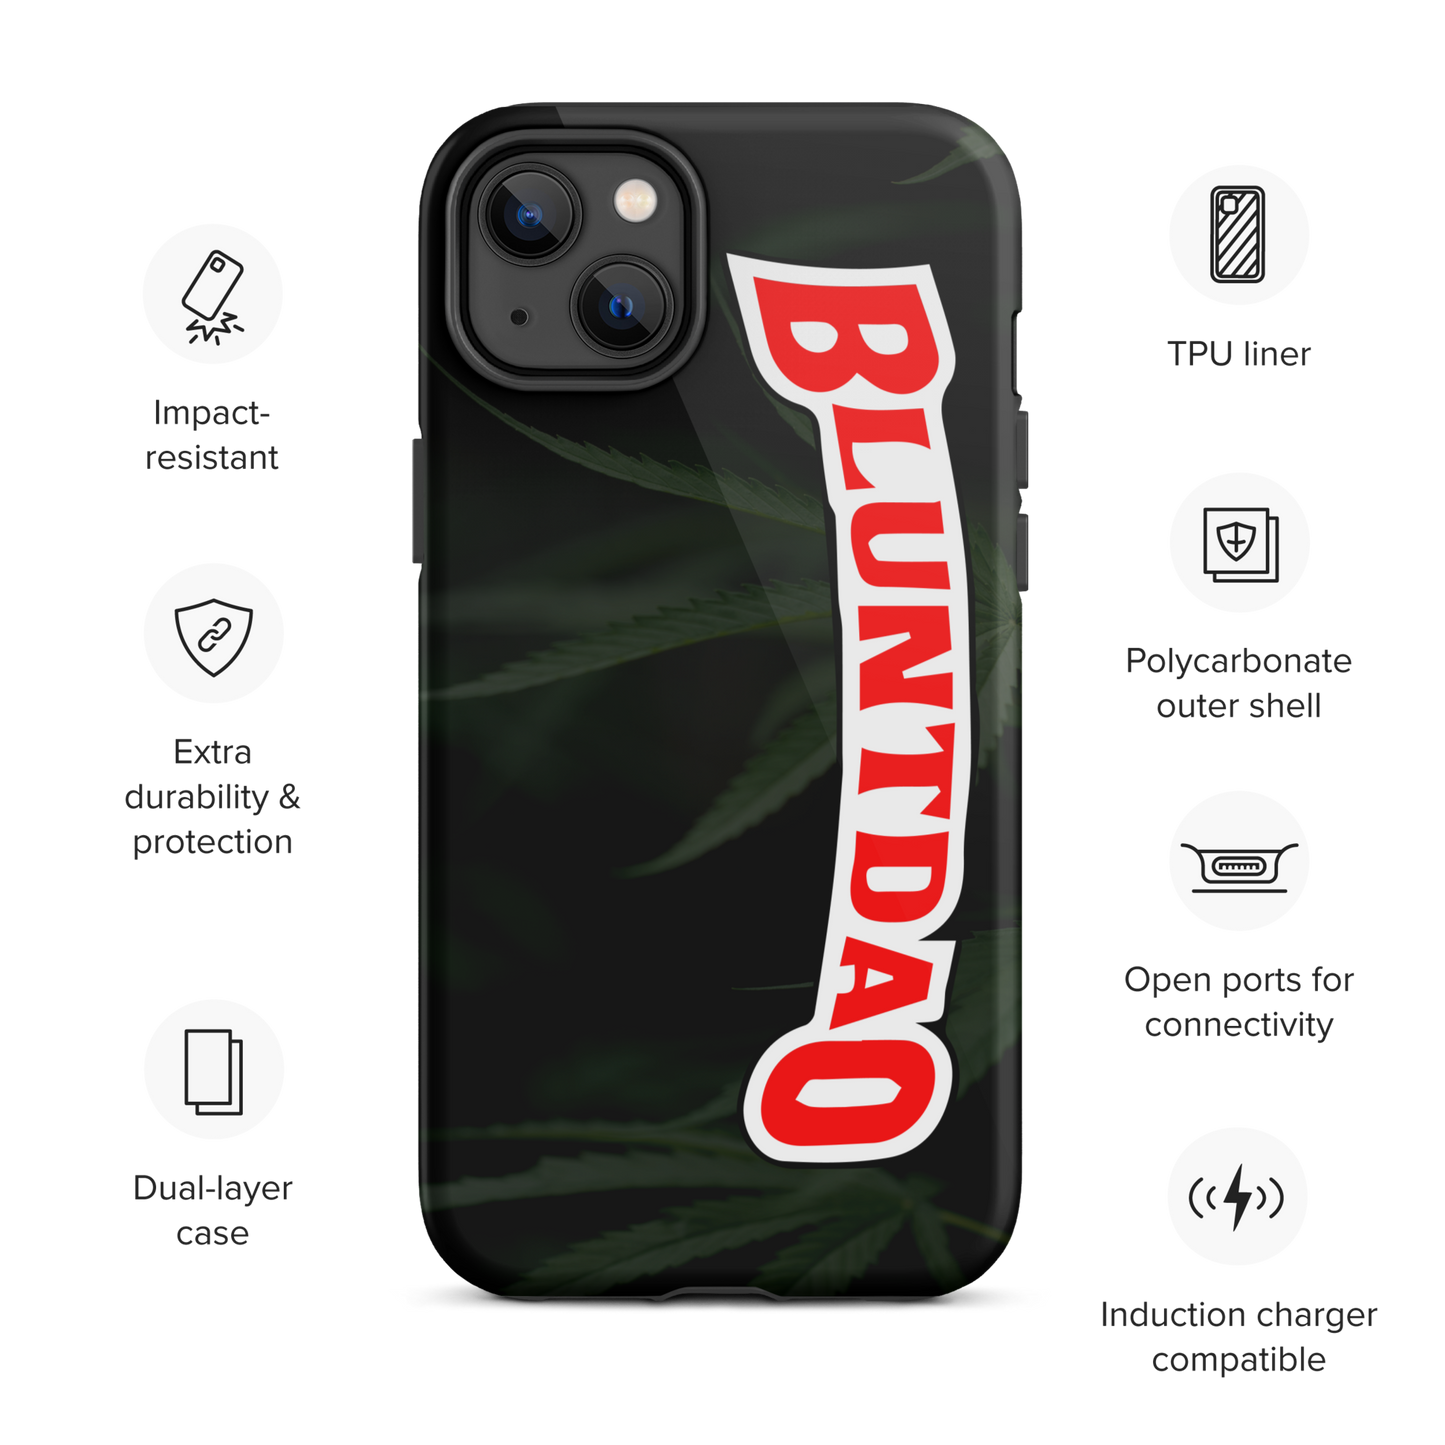 BluntDAO Tough iPhone case